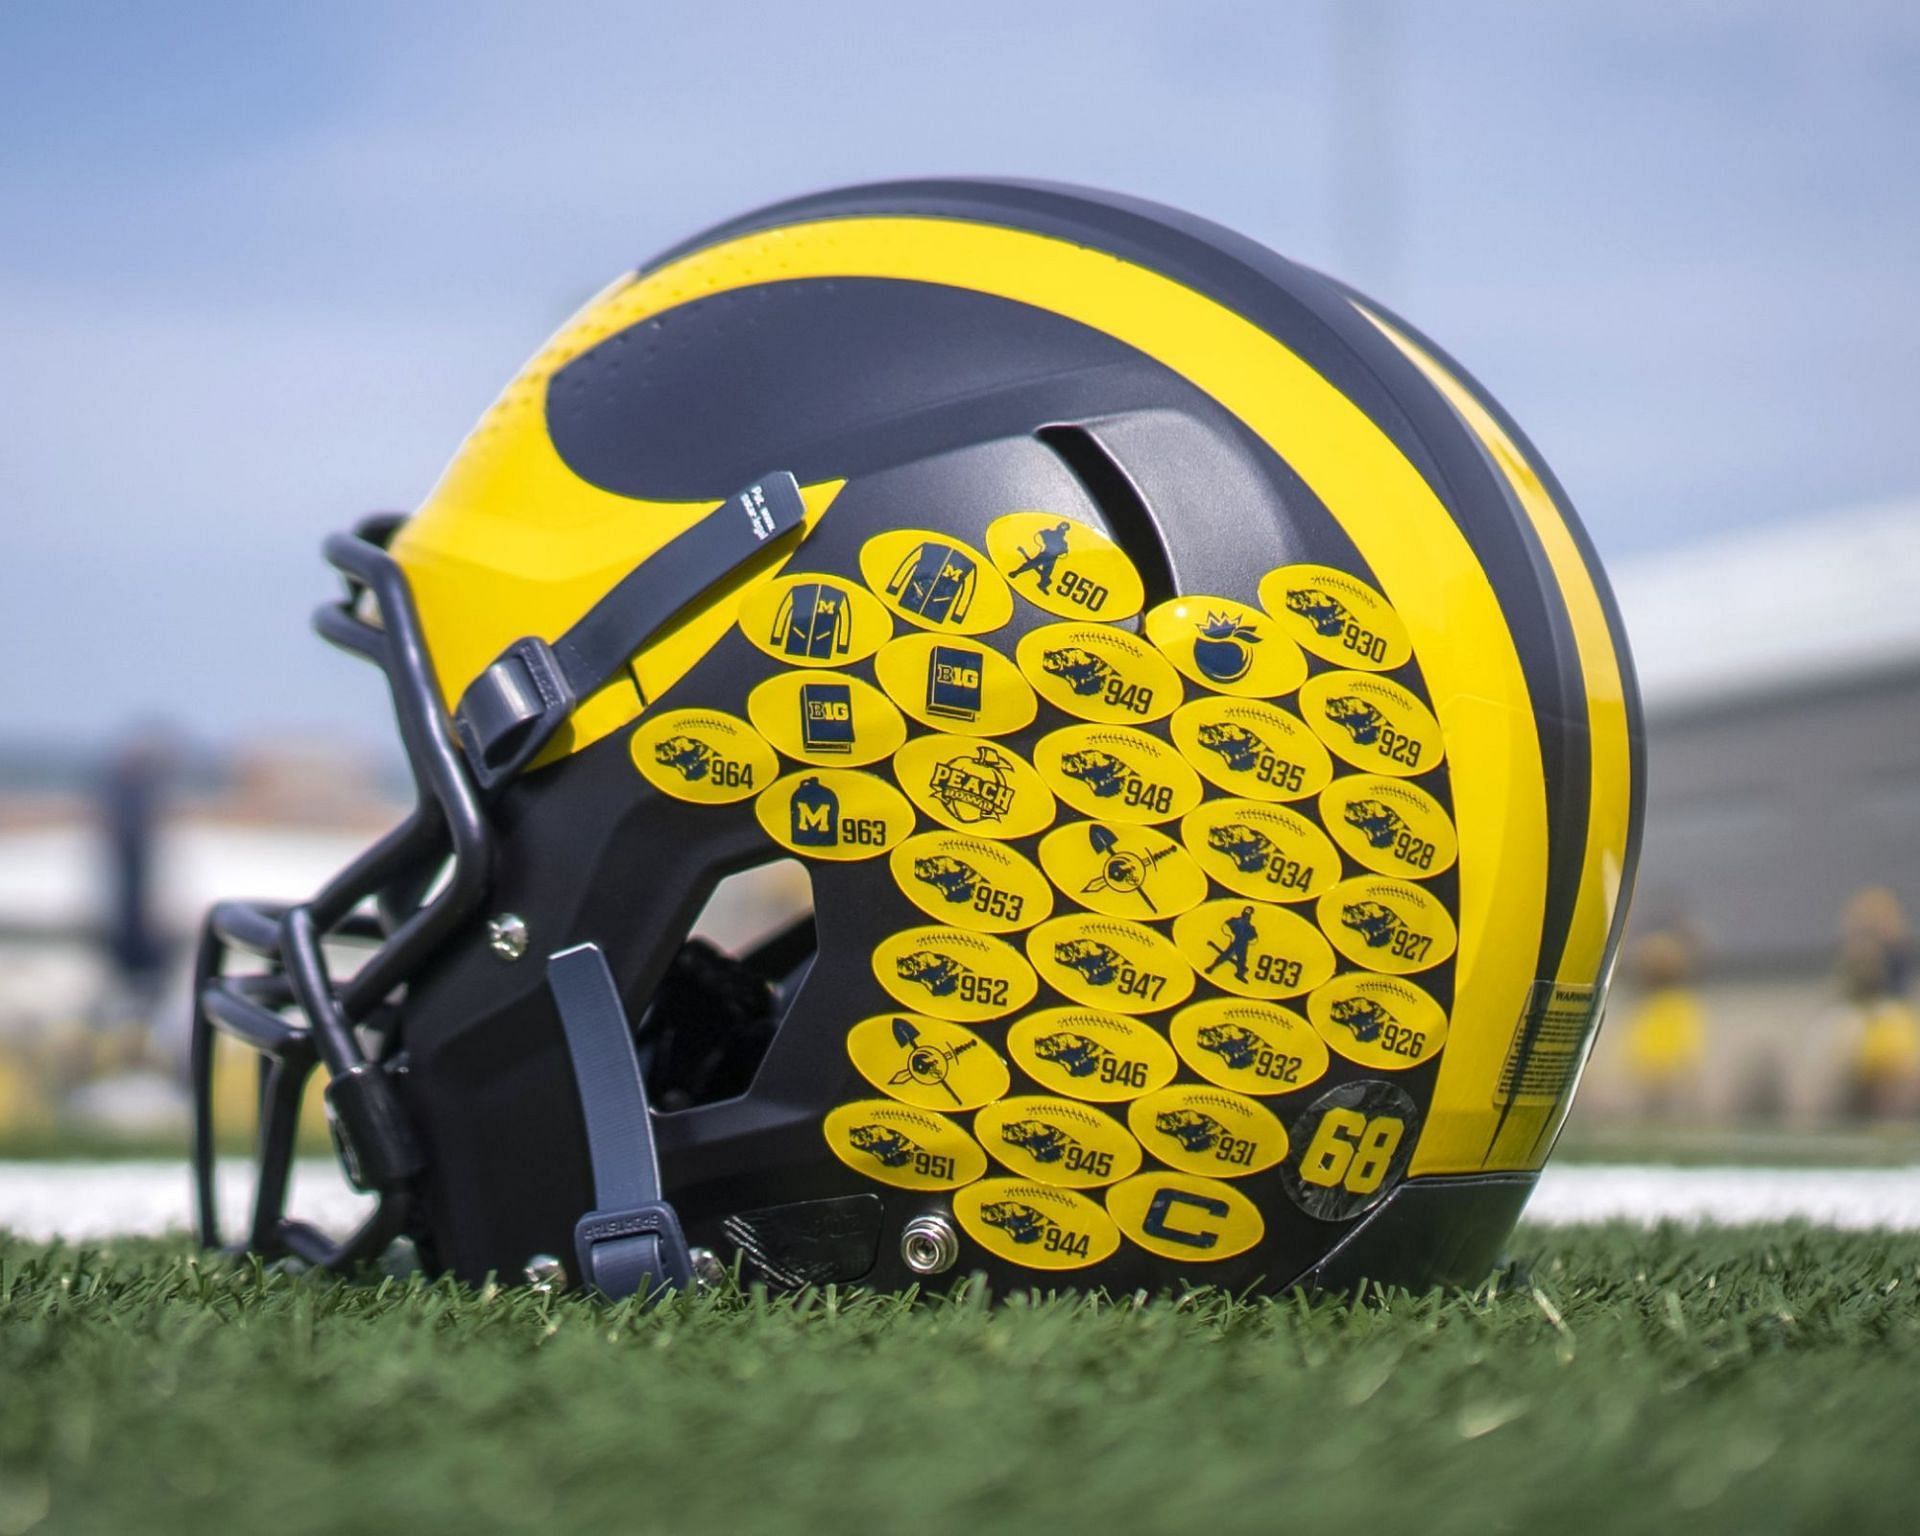 Michigan Wolverines football helmet